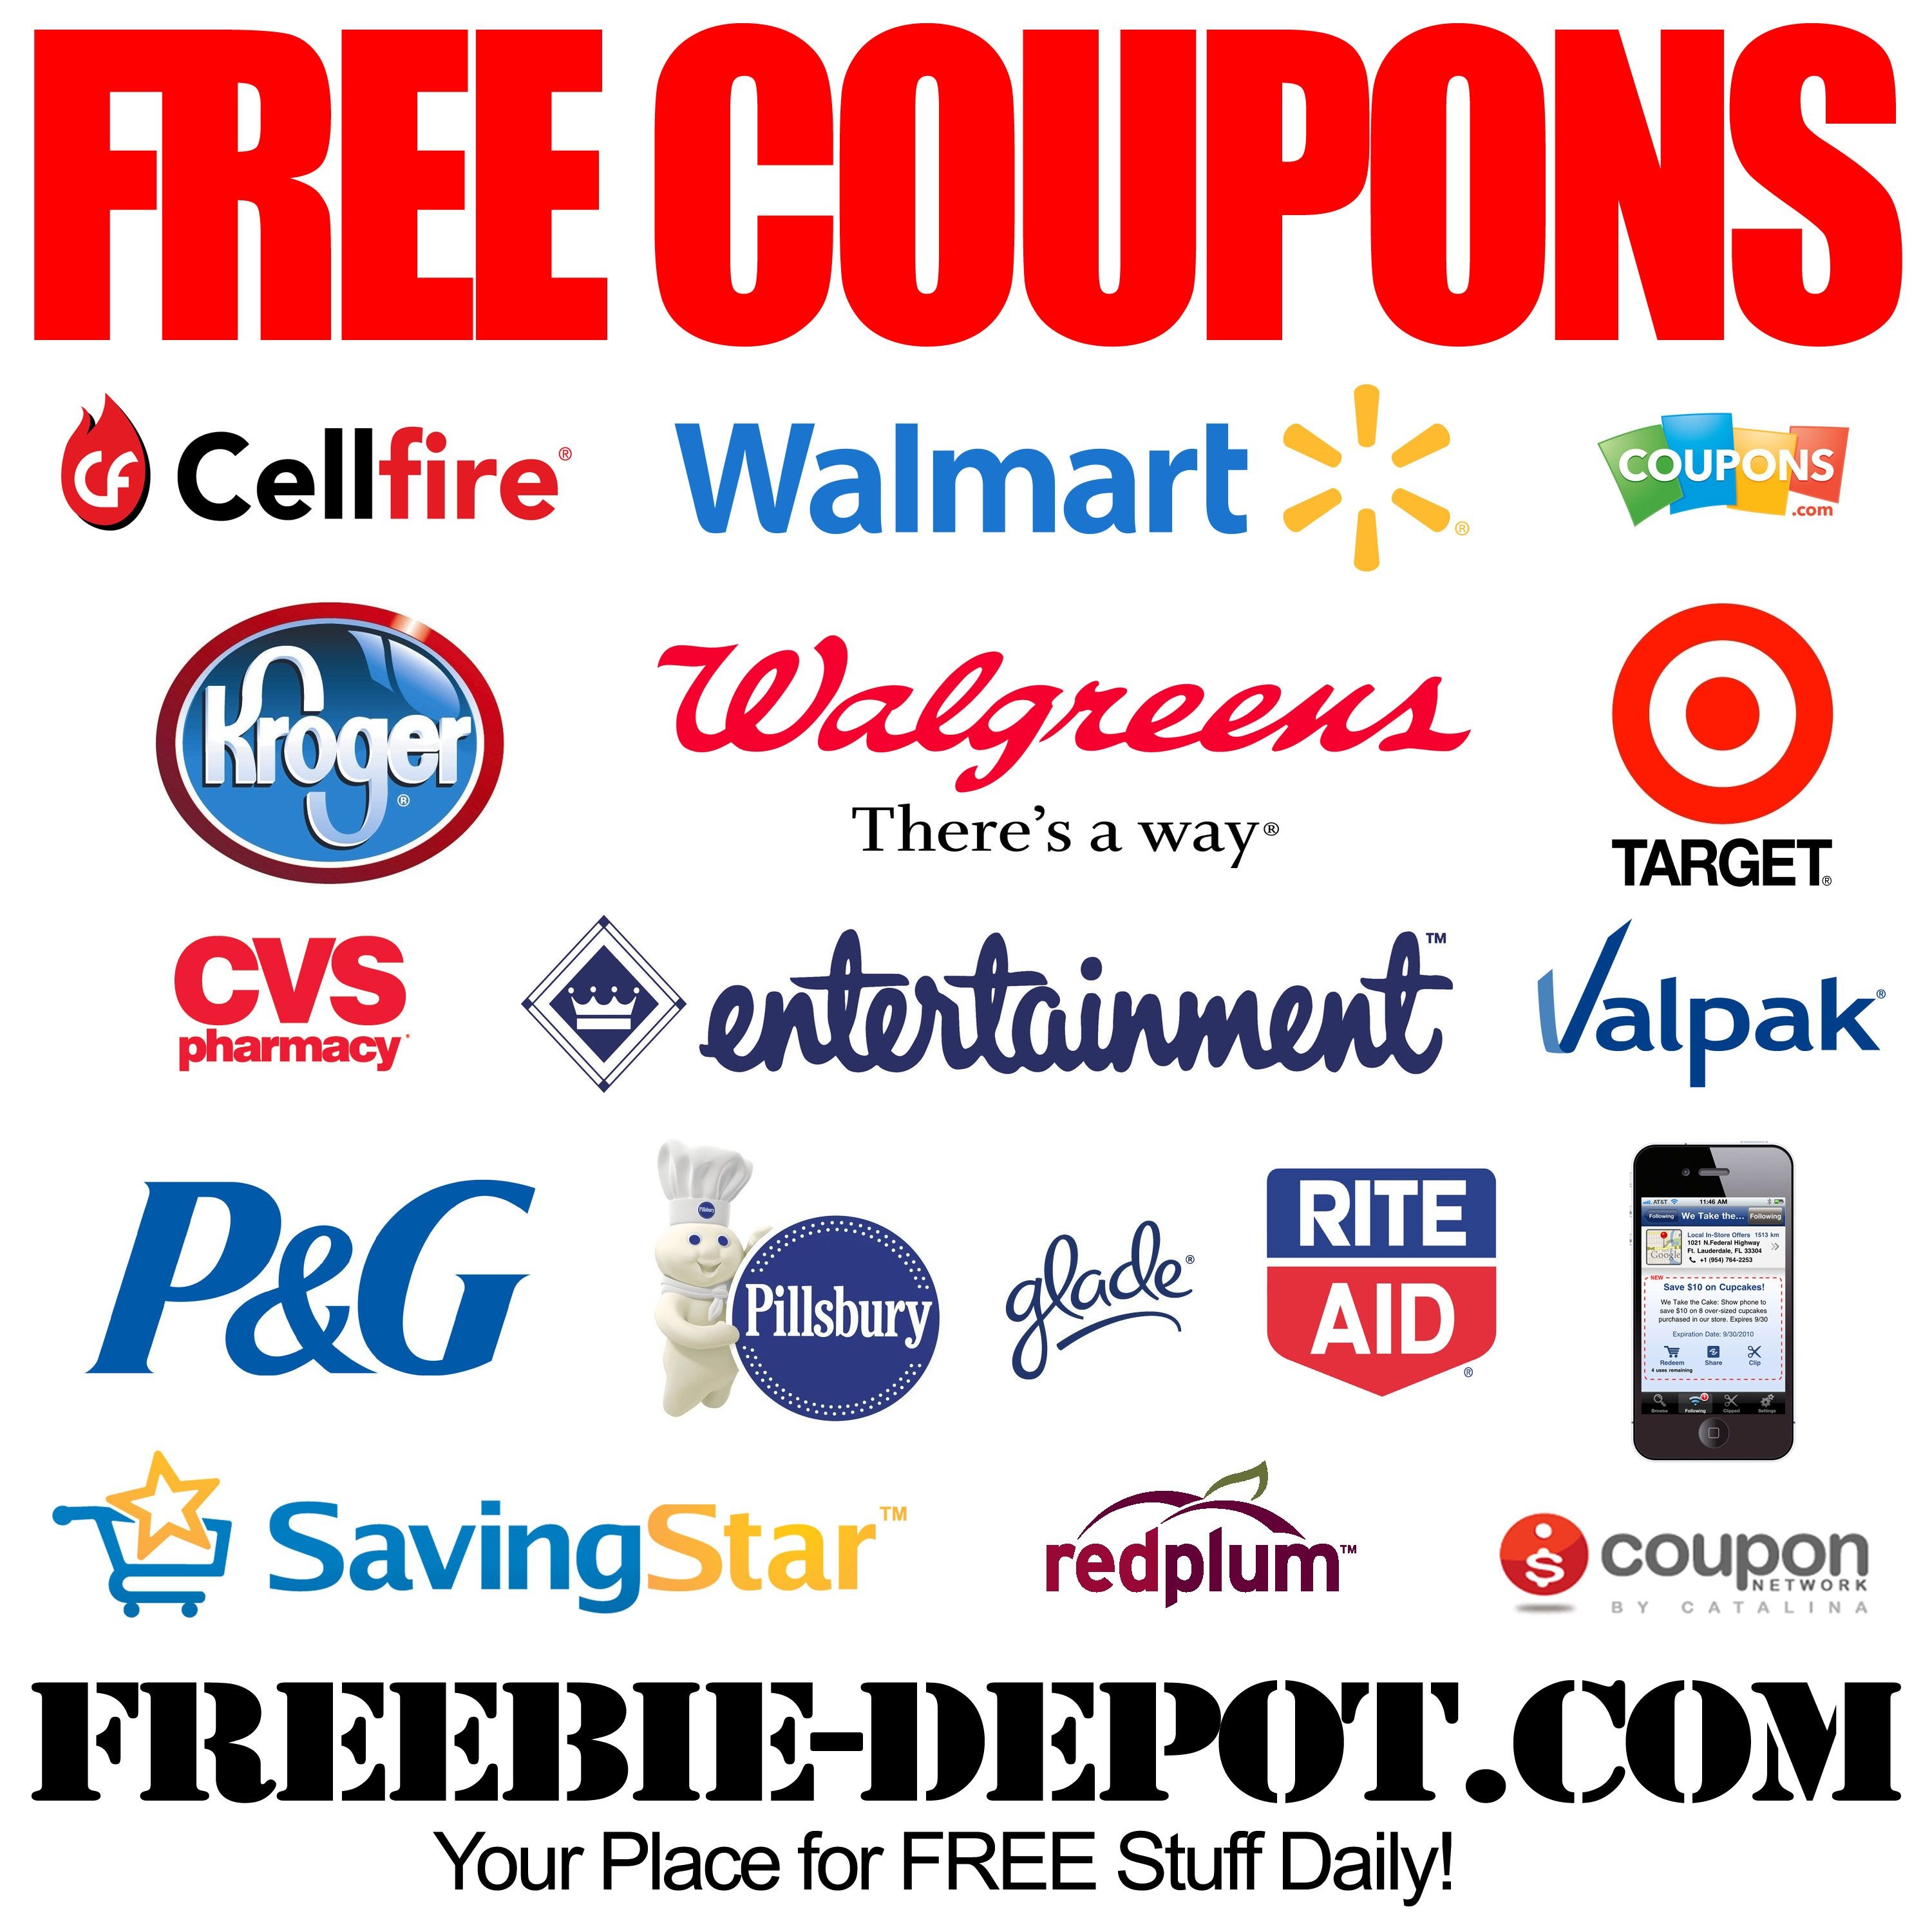 Free Coupons - Free Printable Coupons - Free Grocery Coupons - Free High Value Printable Coupons